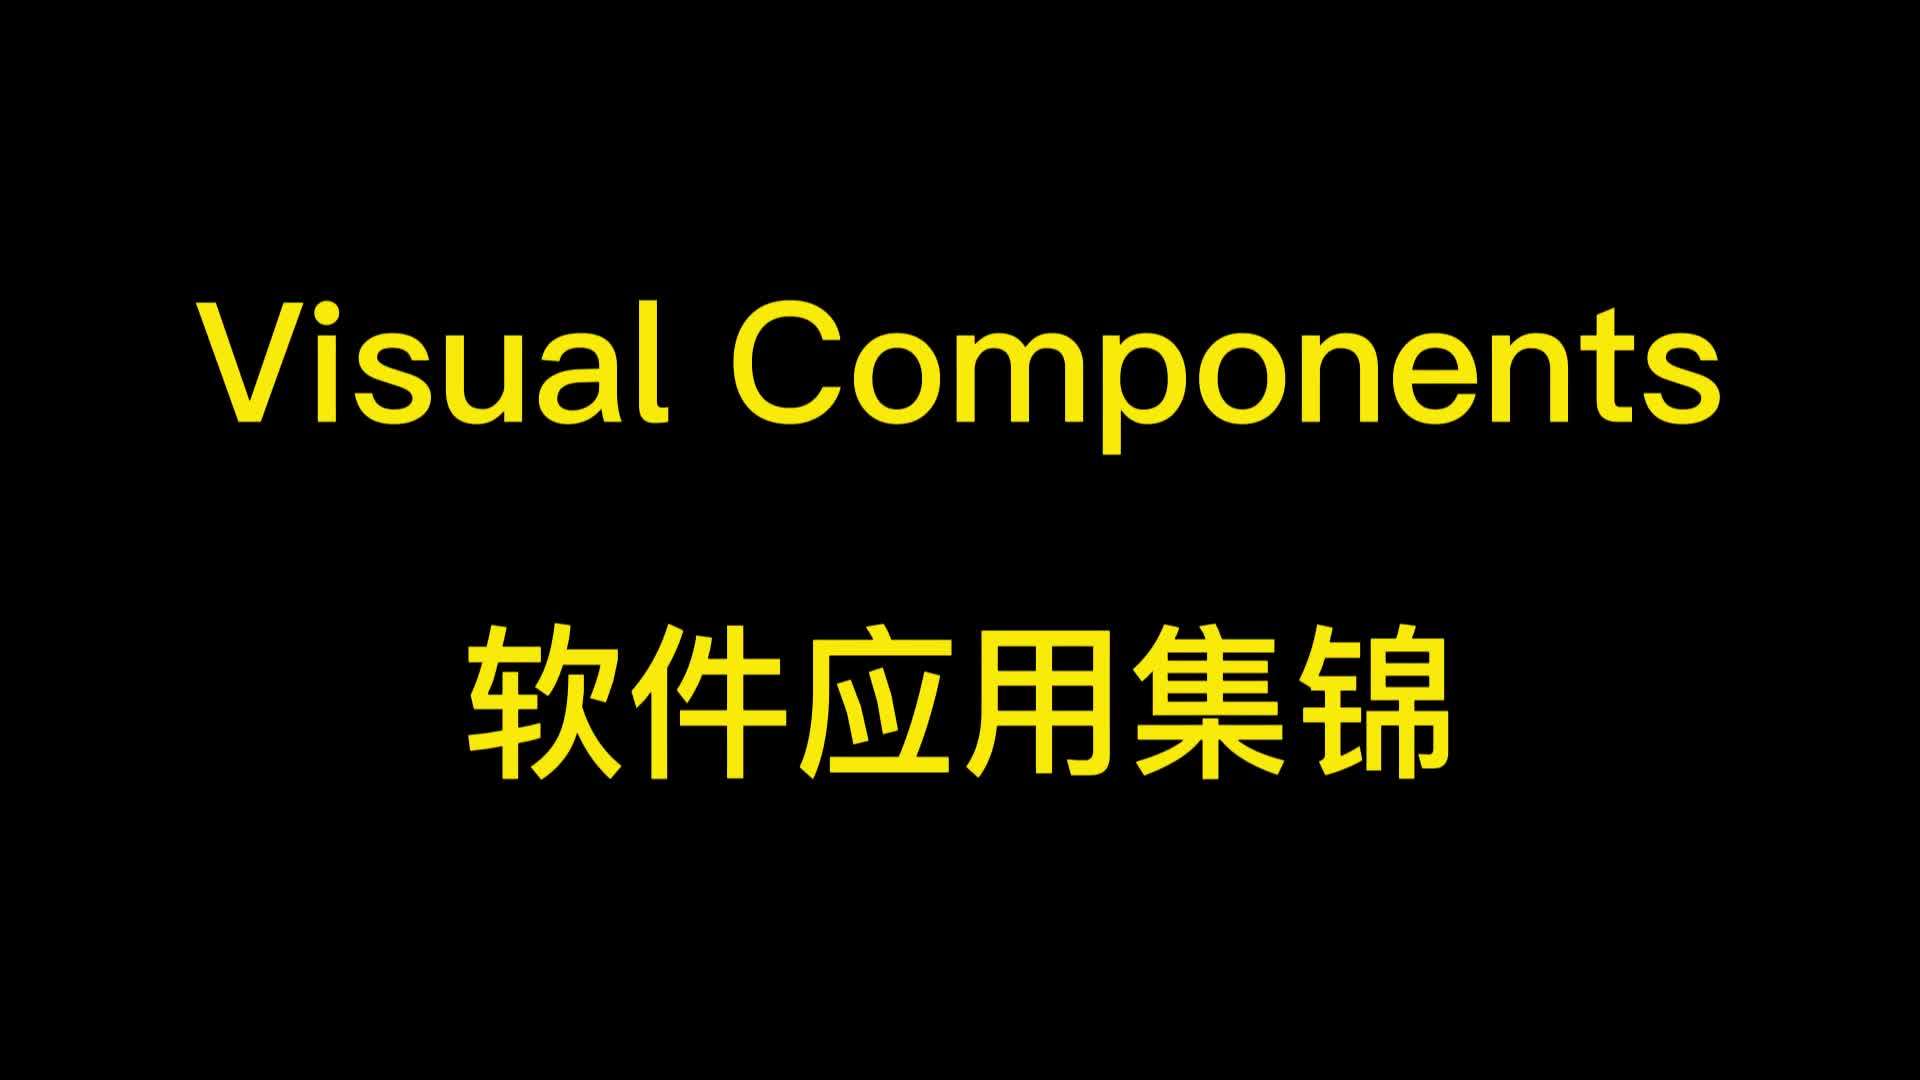 Visual Components软件模拟仿真操作集锦 衡祖仿真